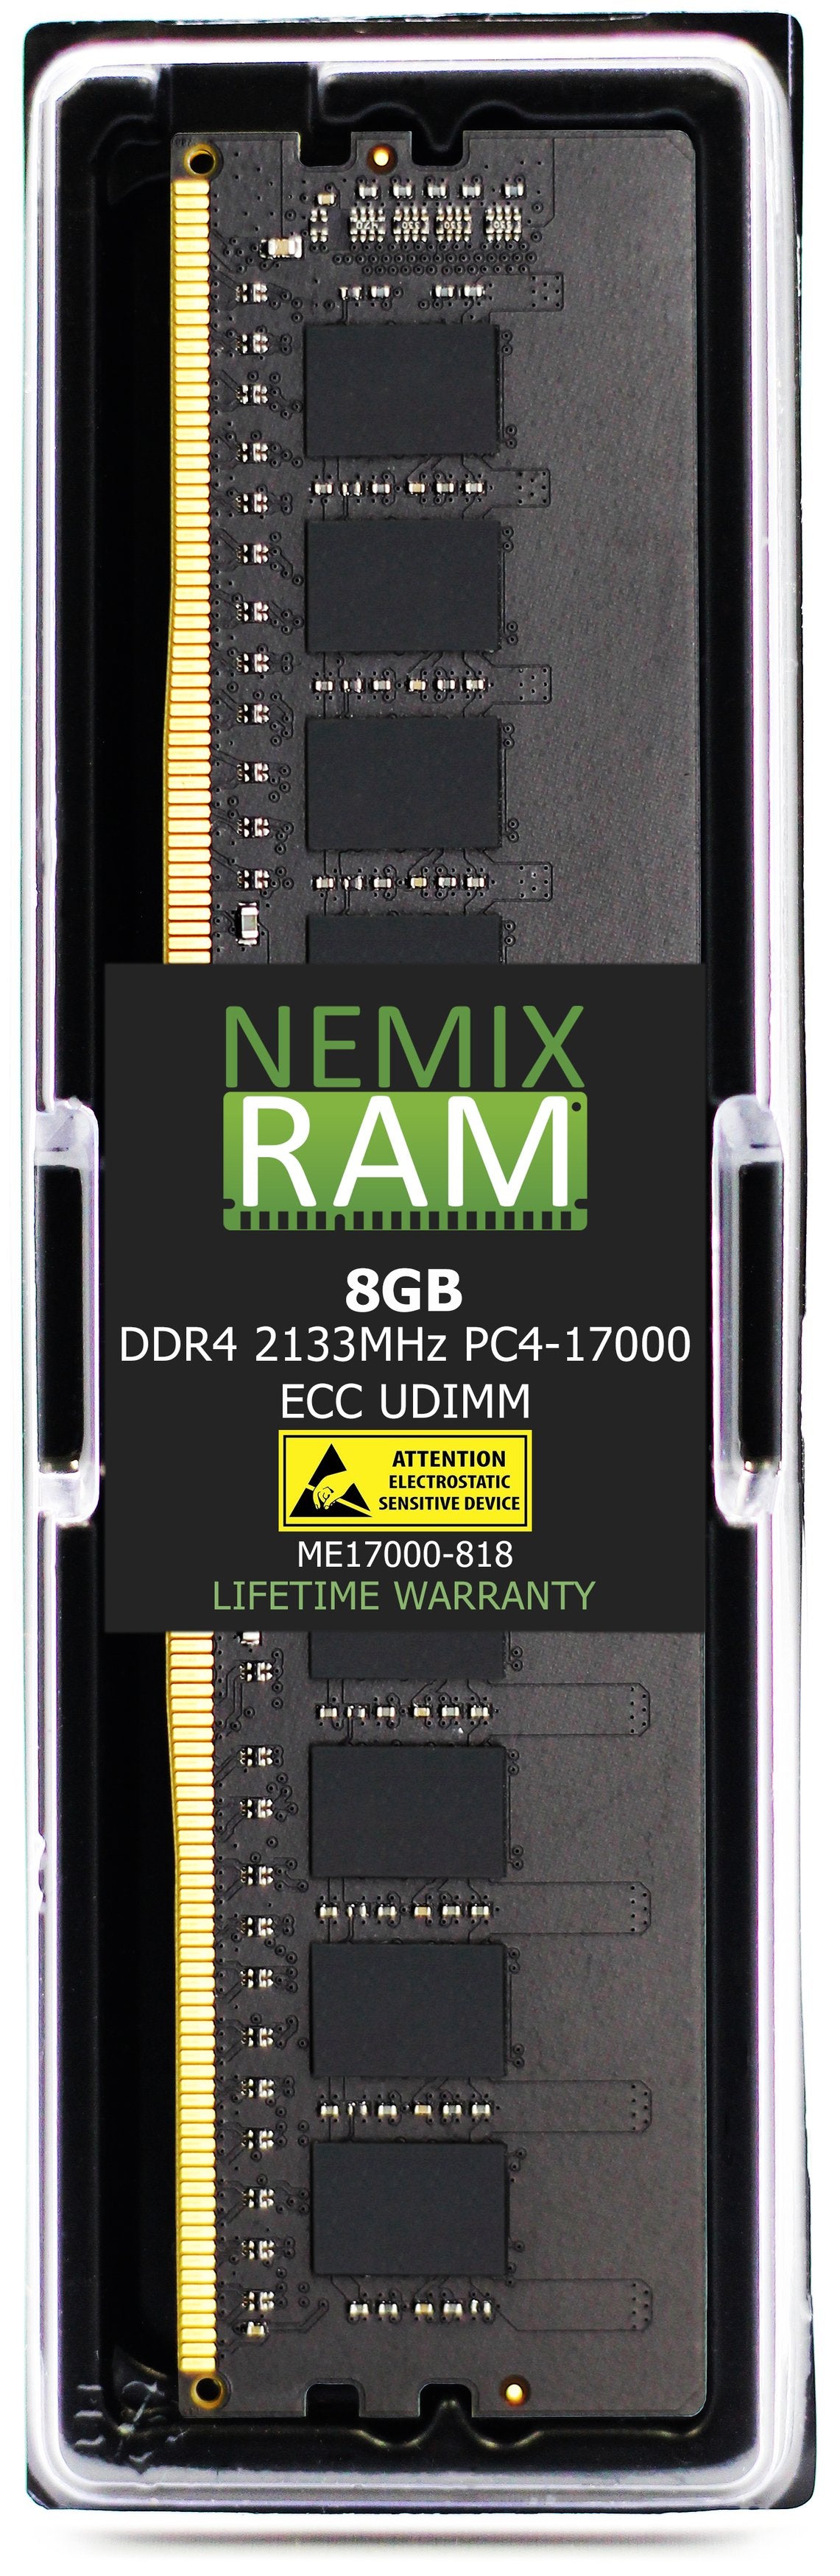 NEC Express5800 T110h Memory Module N8102-657F 8GB DDR4 2133MHZ PC4-17000 ECC UDIMM